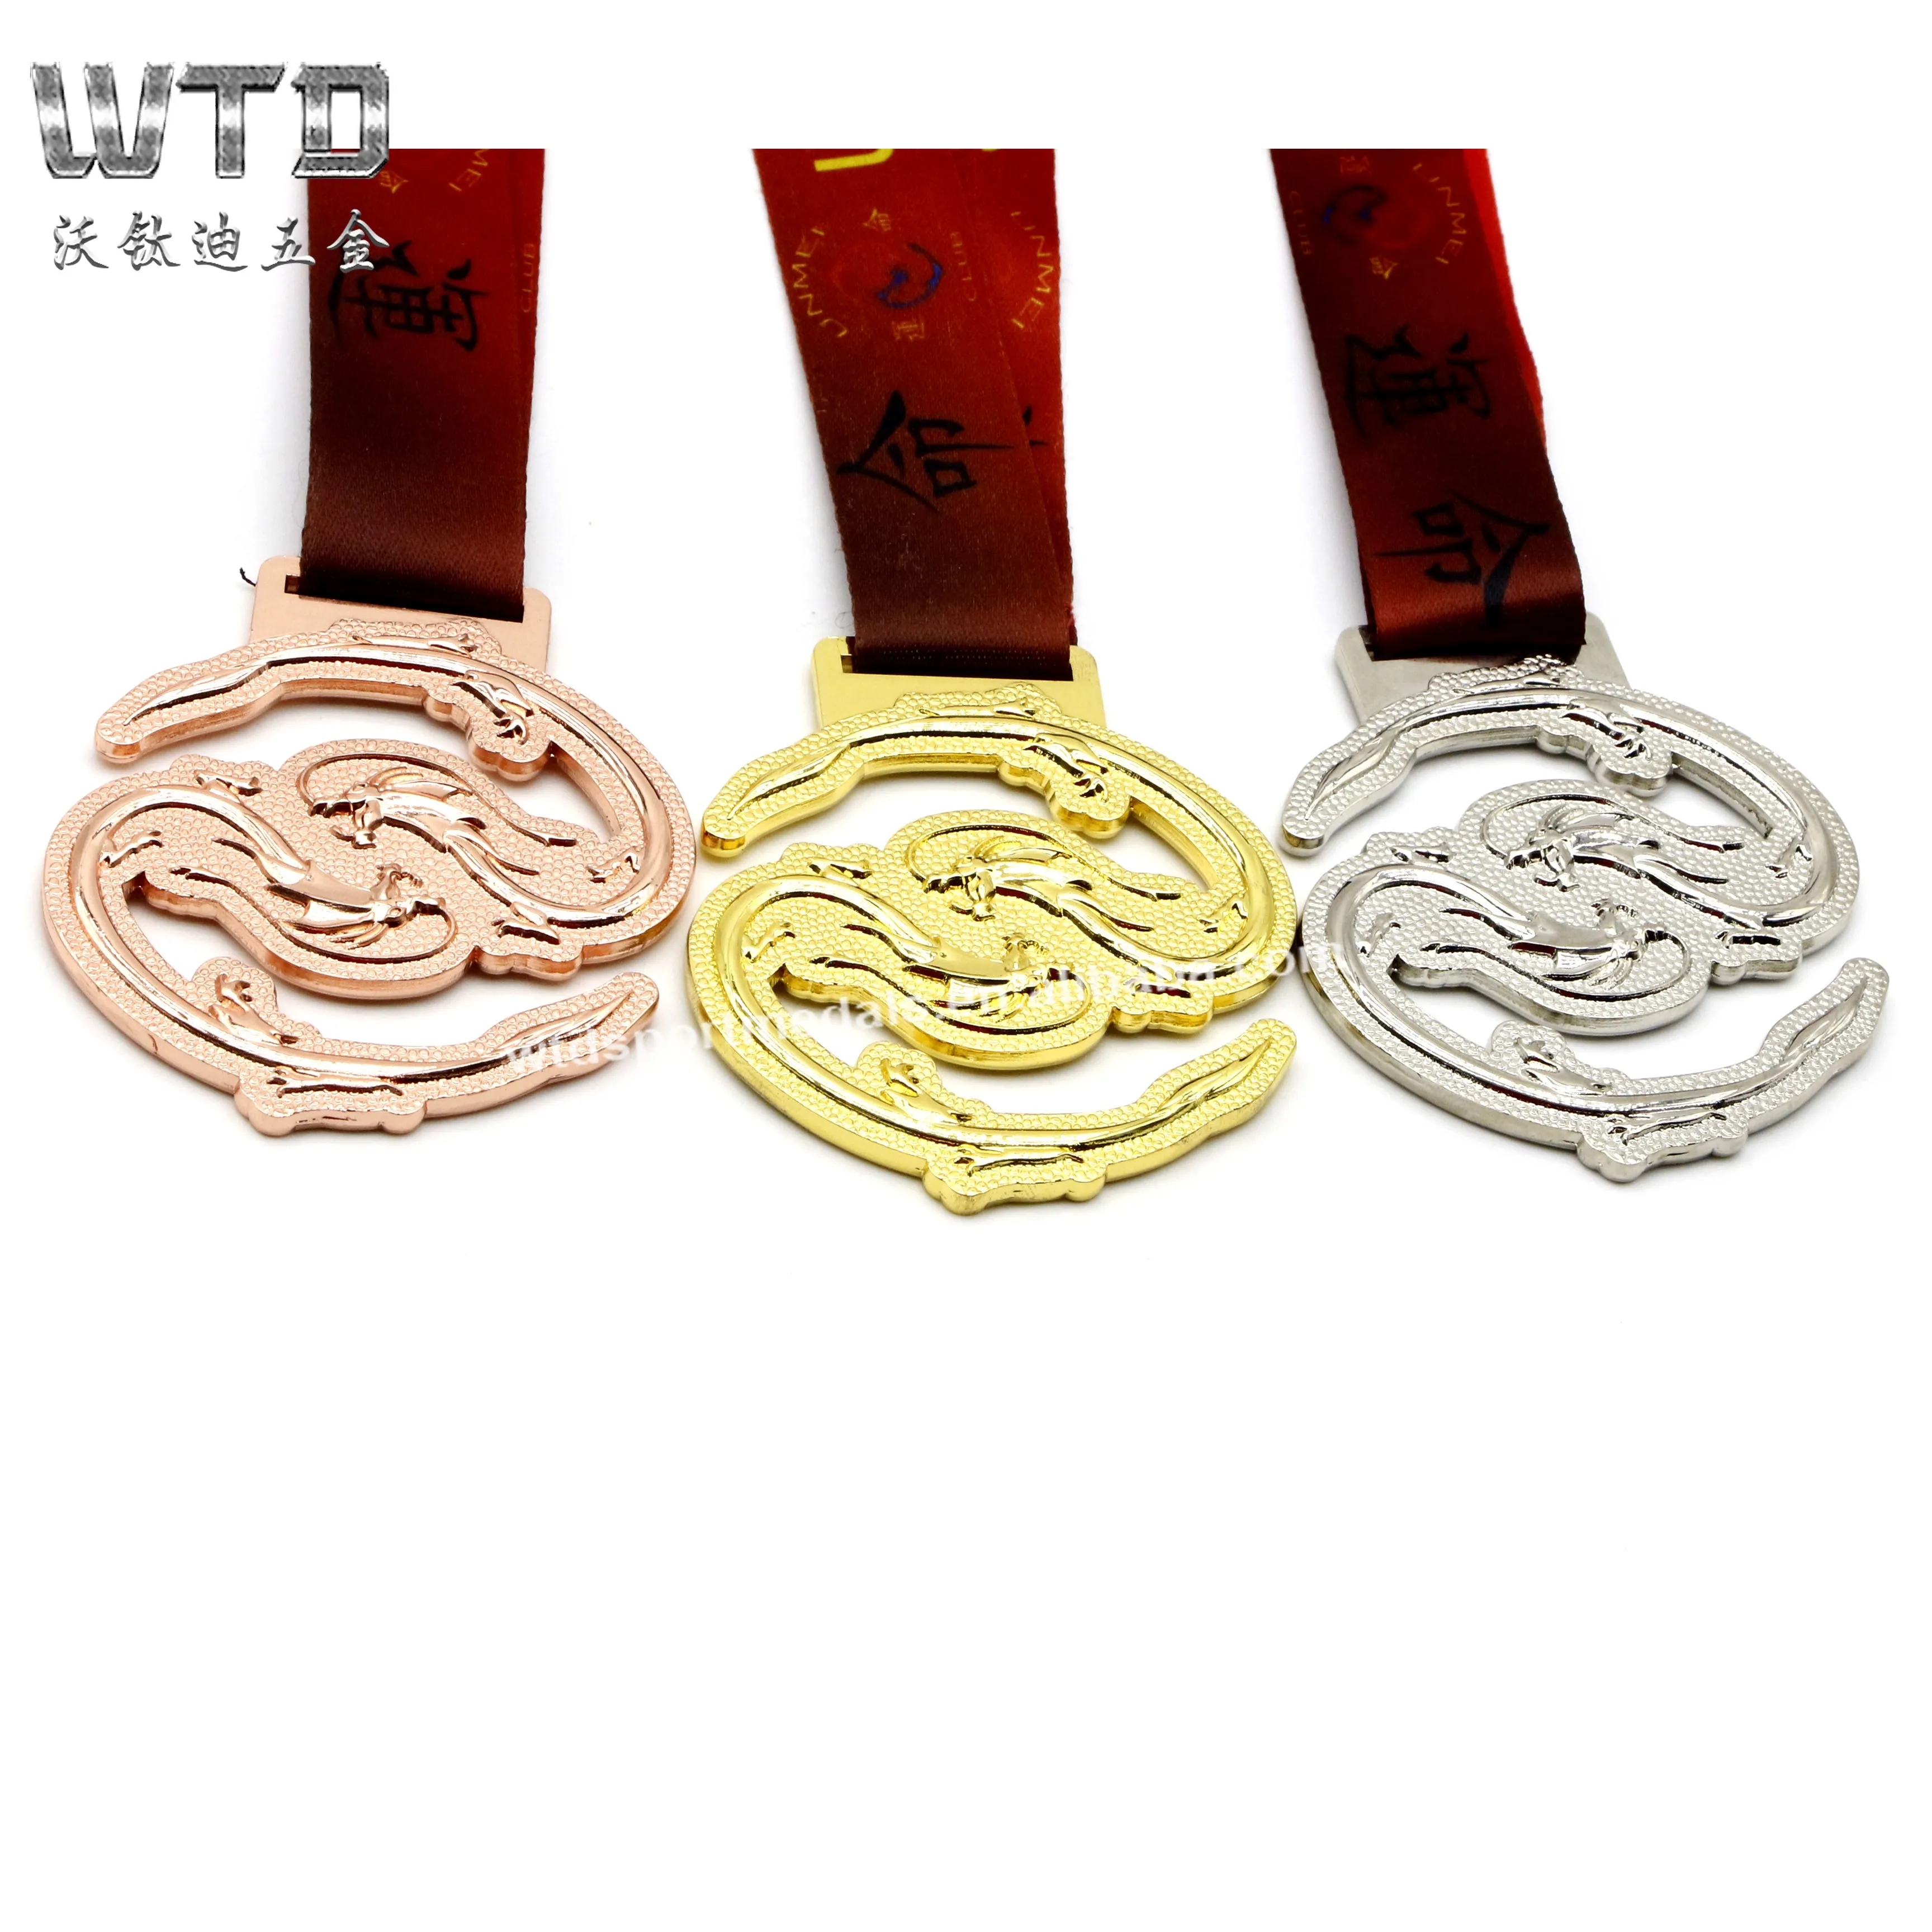 gold Dragon Boat Racing Medals